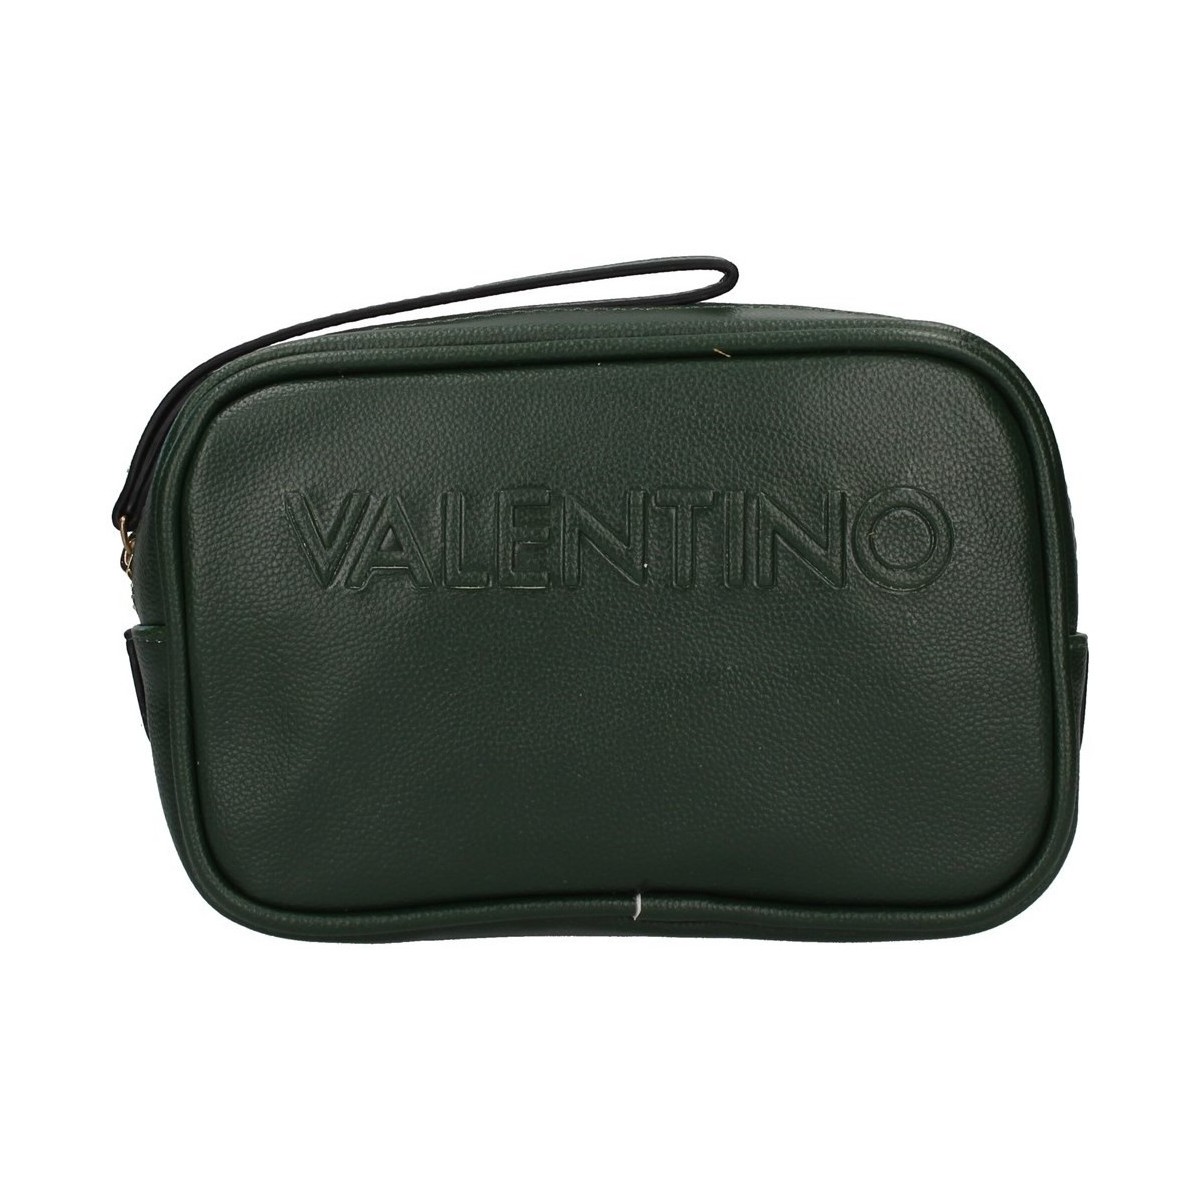 Sacs Femme Trousses Valentino Bags VBE5JF506 Vert